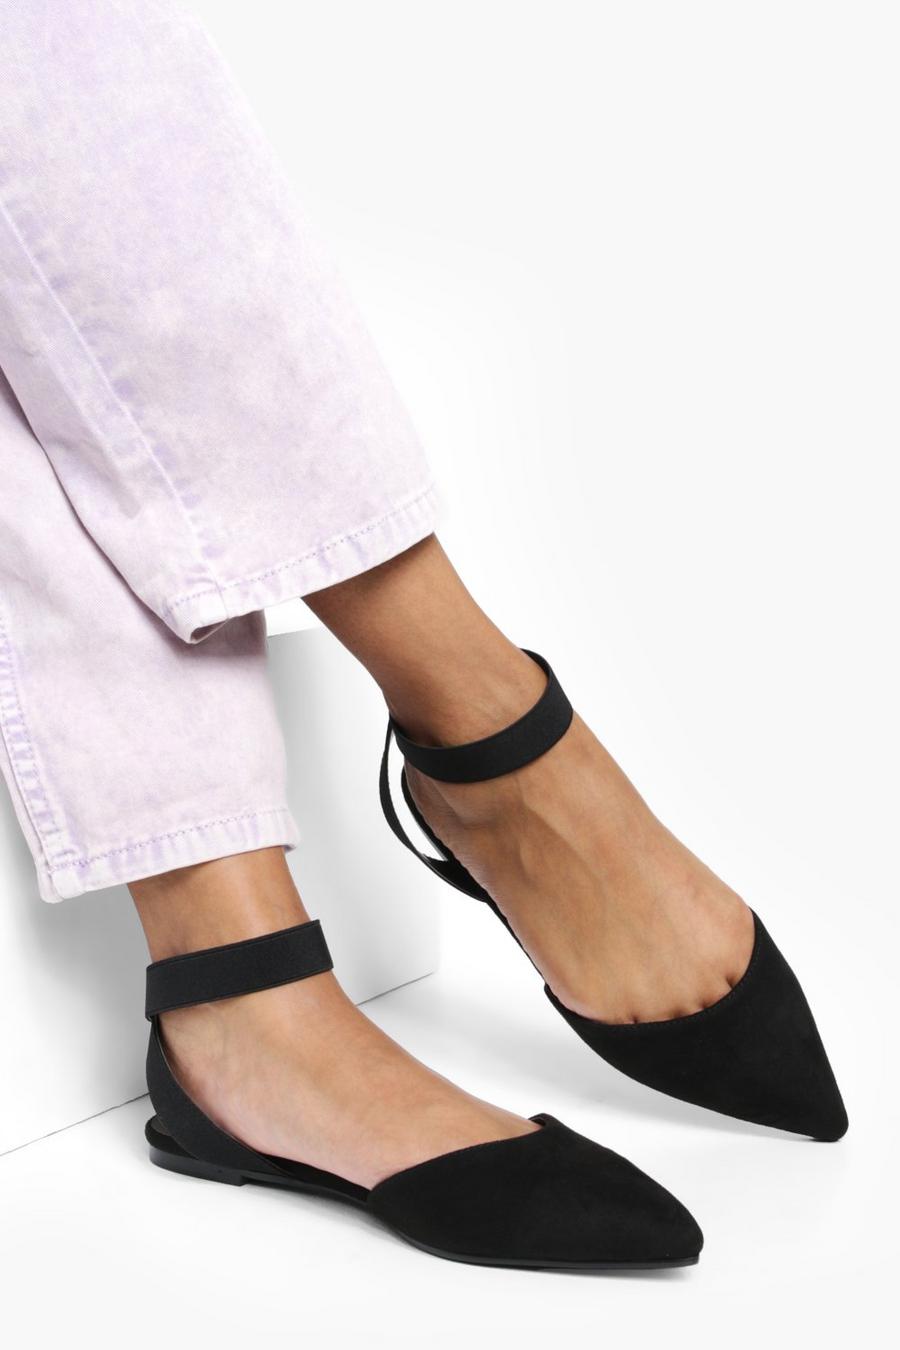 Scarpe piatte a punta a calzata ampia con fascette elasticizzate, Black